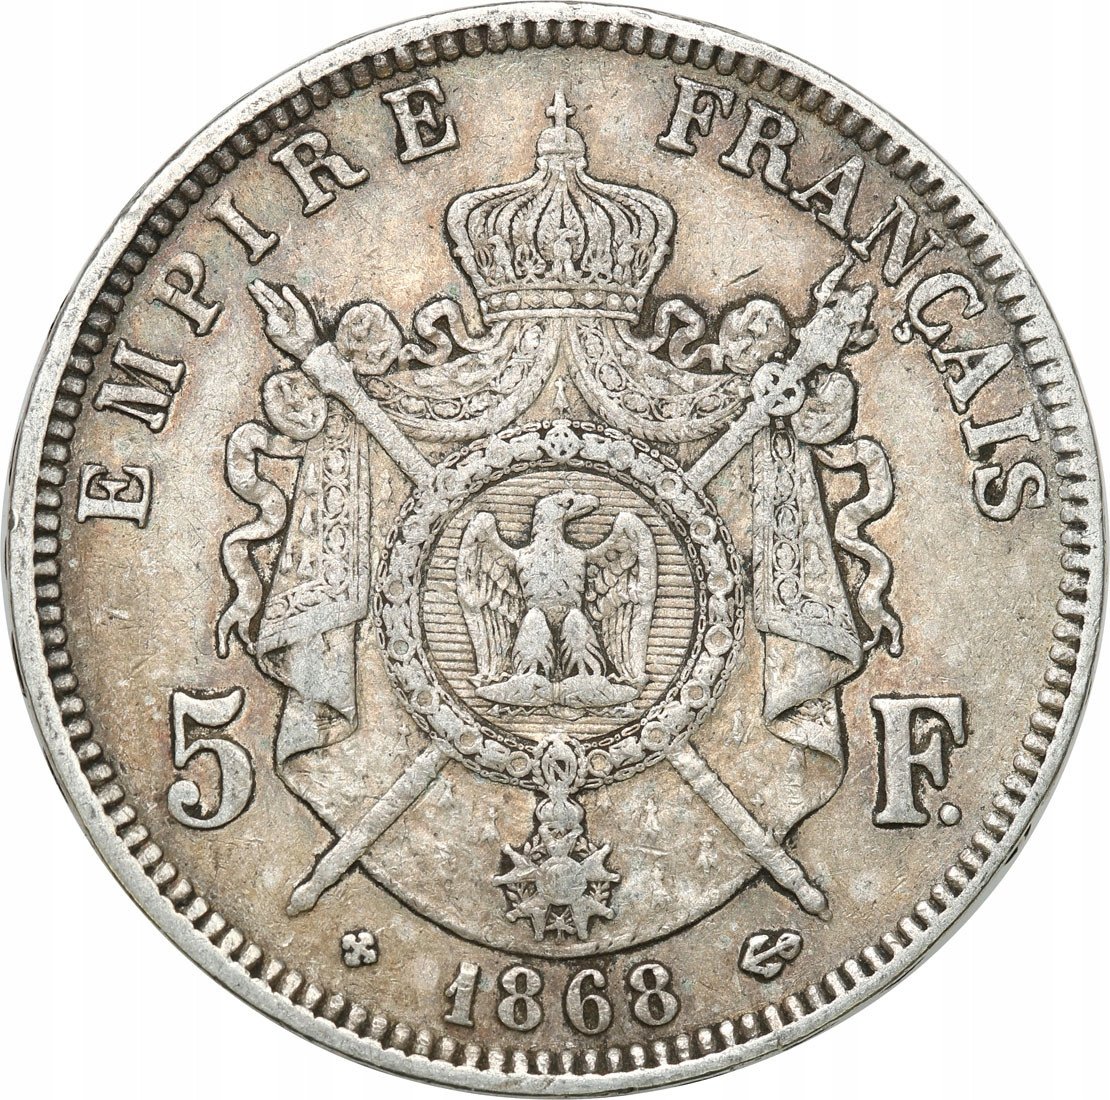 Francja. Napoleon 5 franków 1868 st.3+